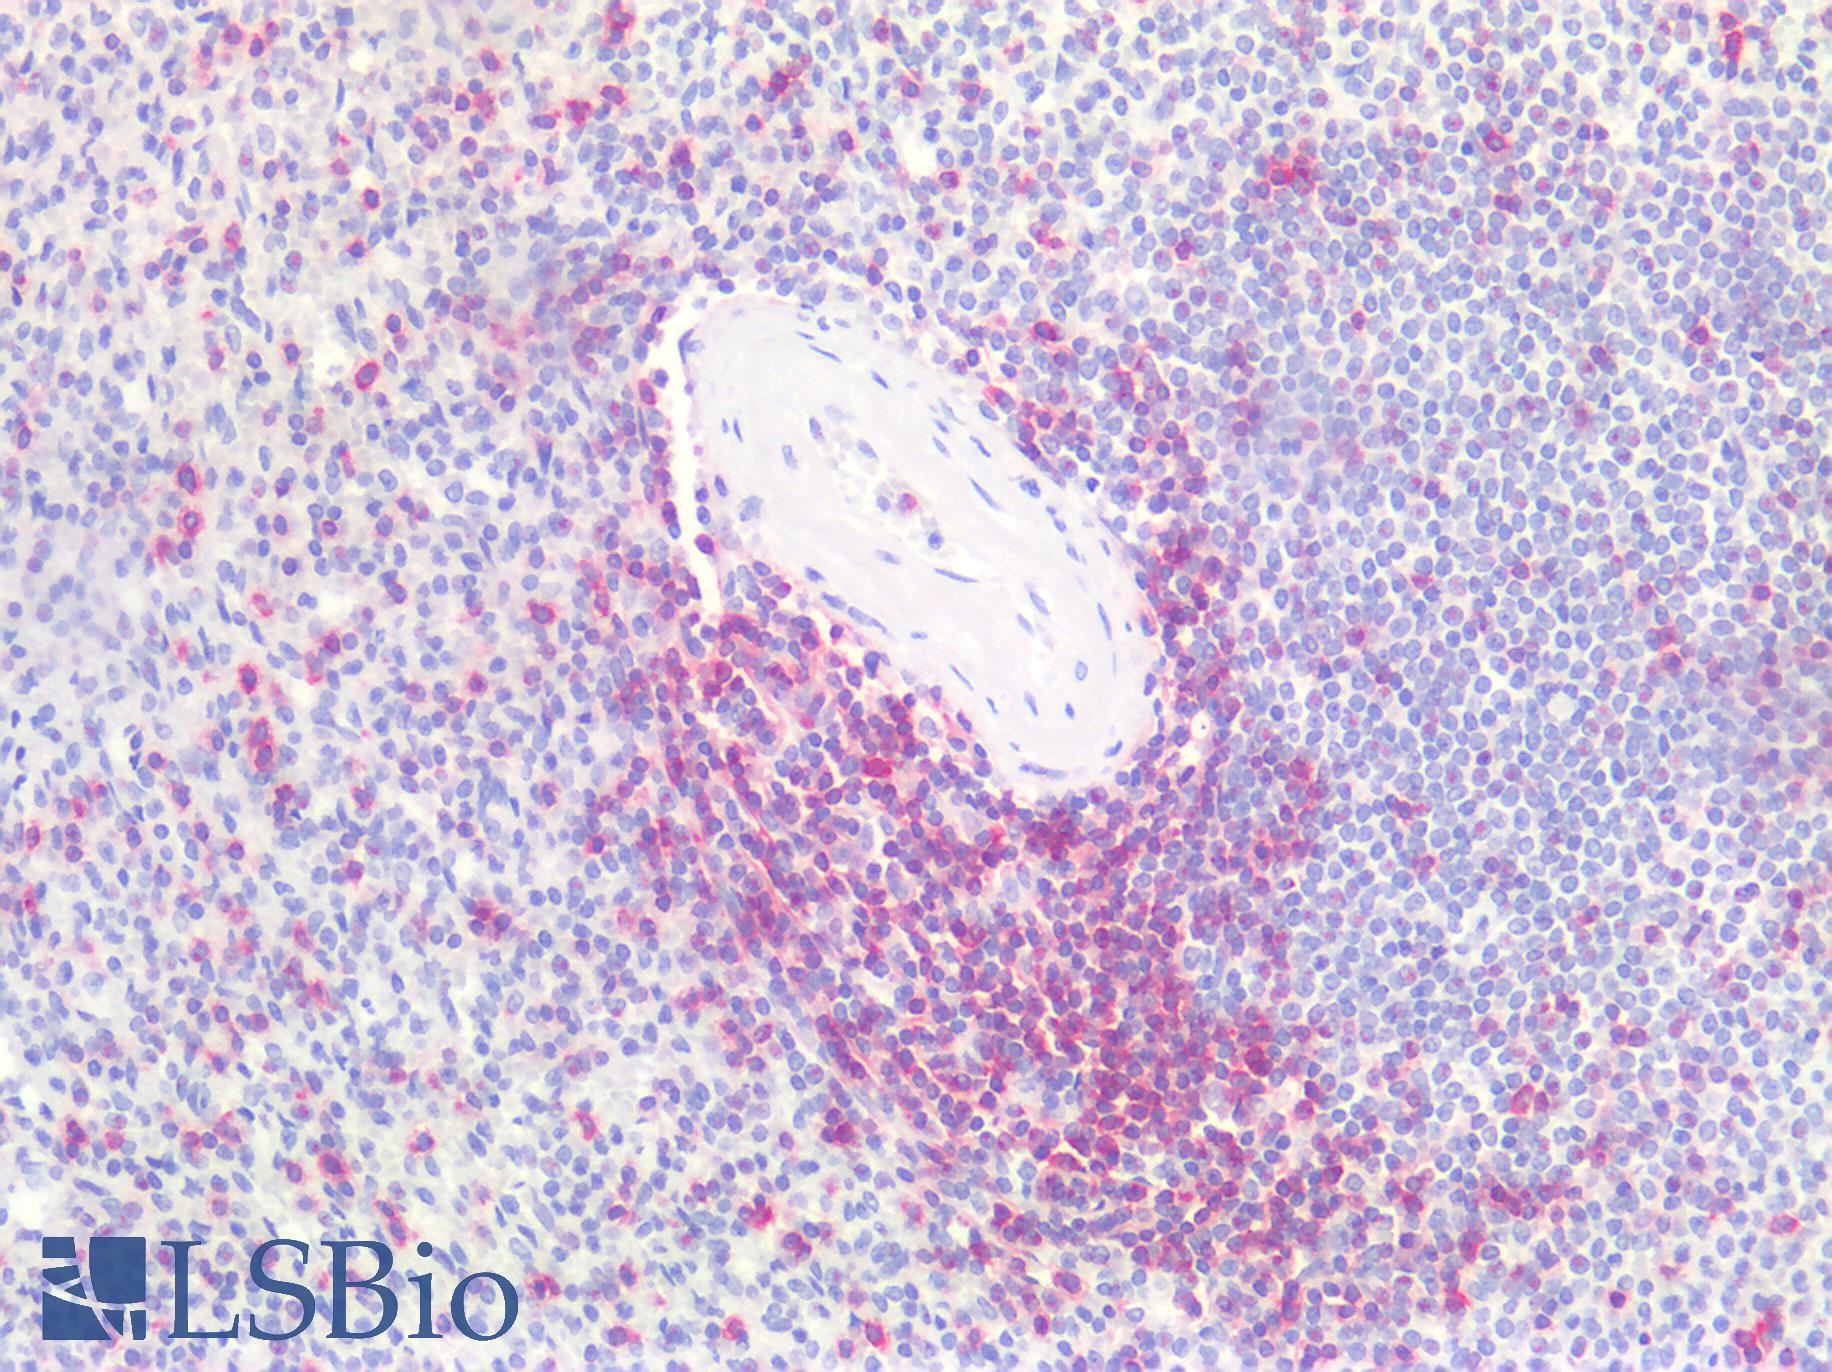 CD7 Antibody - Human Spleen: Formalin-Fixed, Paraffin-Embedded (FFPE)